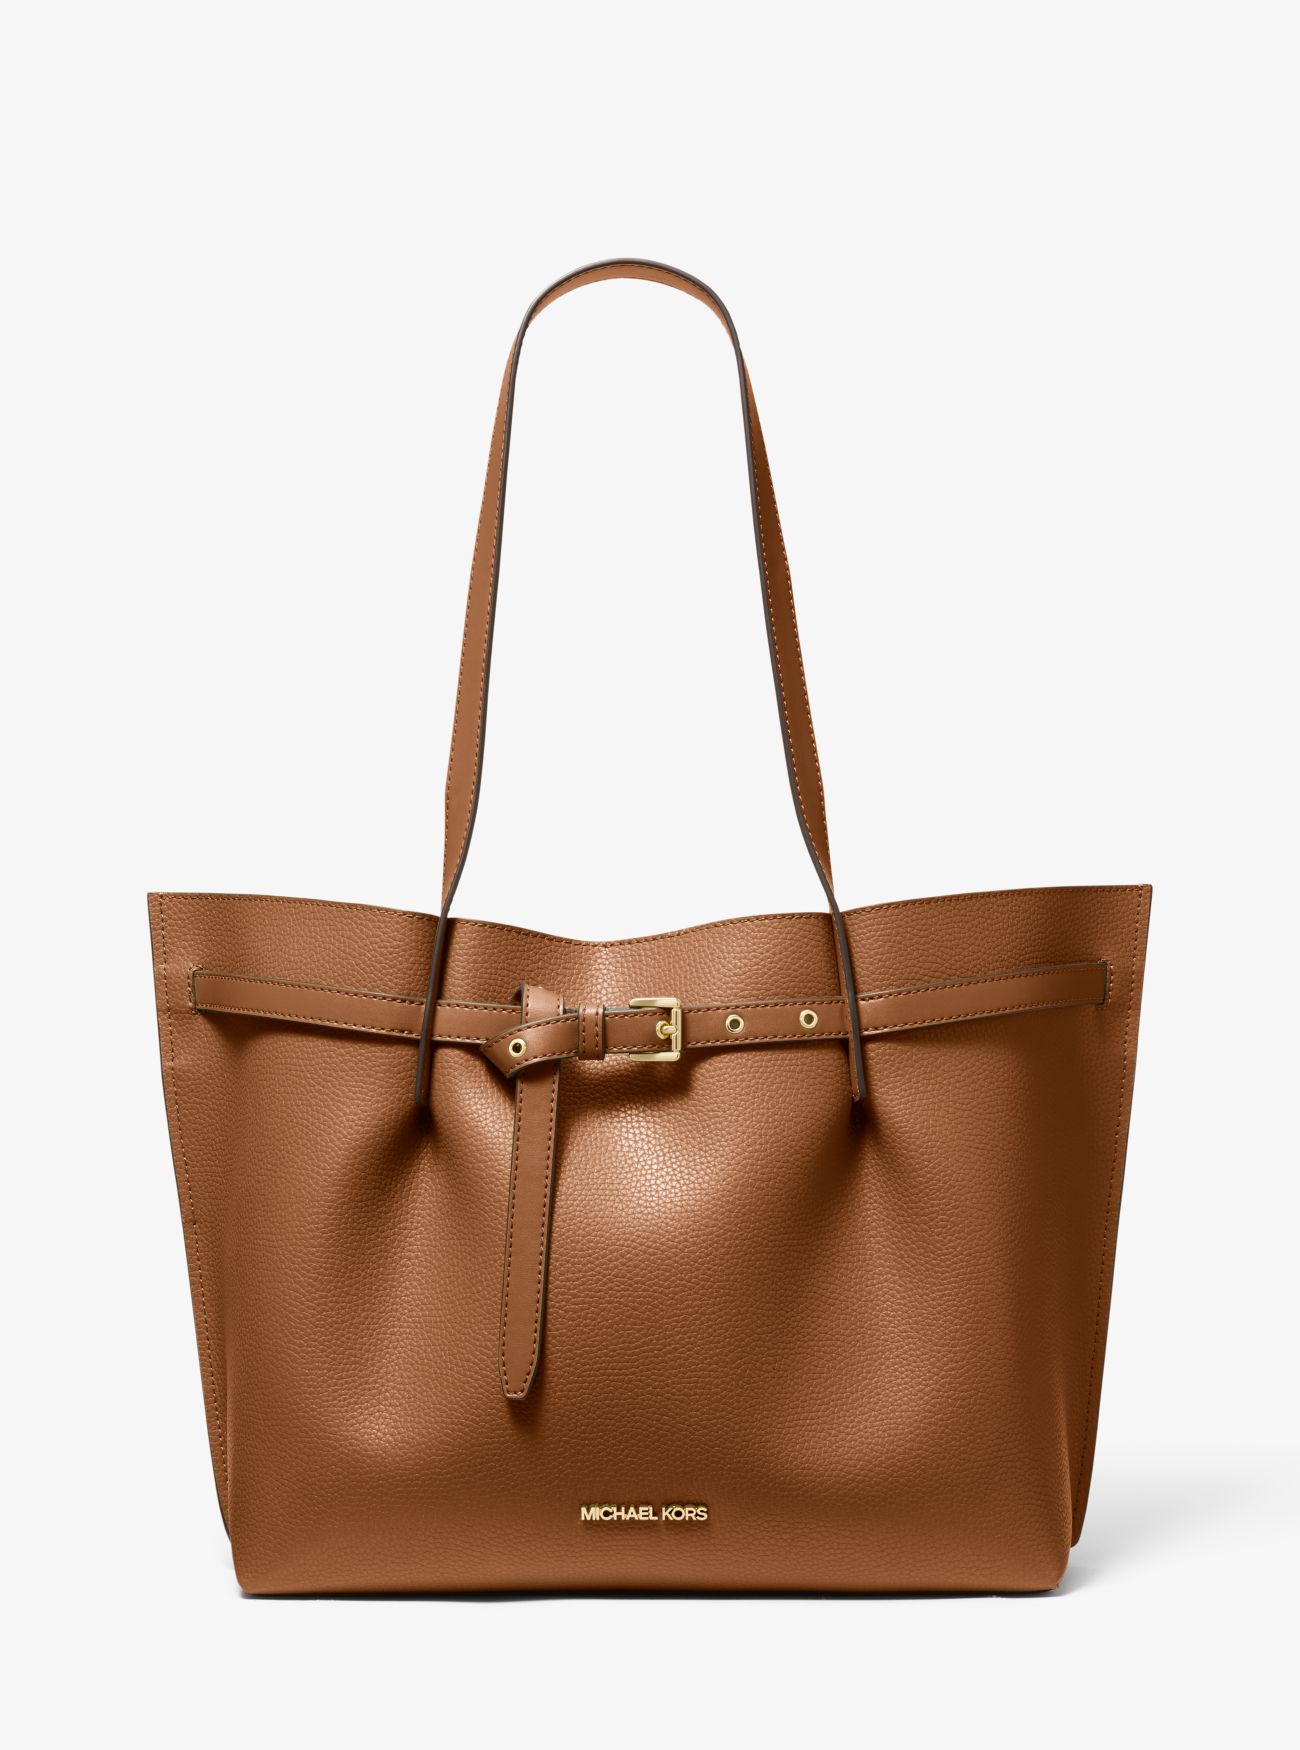 MK Emilia Large Pebbled Leather Tote Bag - Luggage Brown - Michael Kors